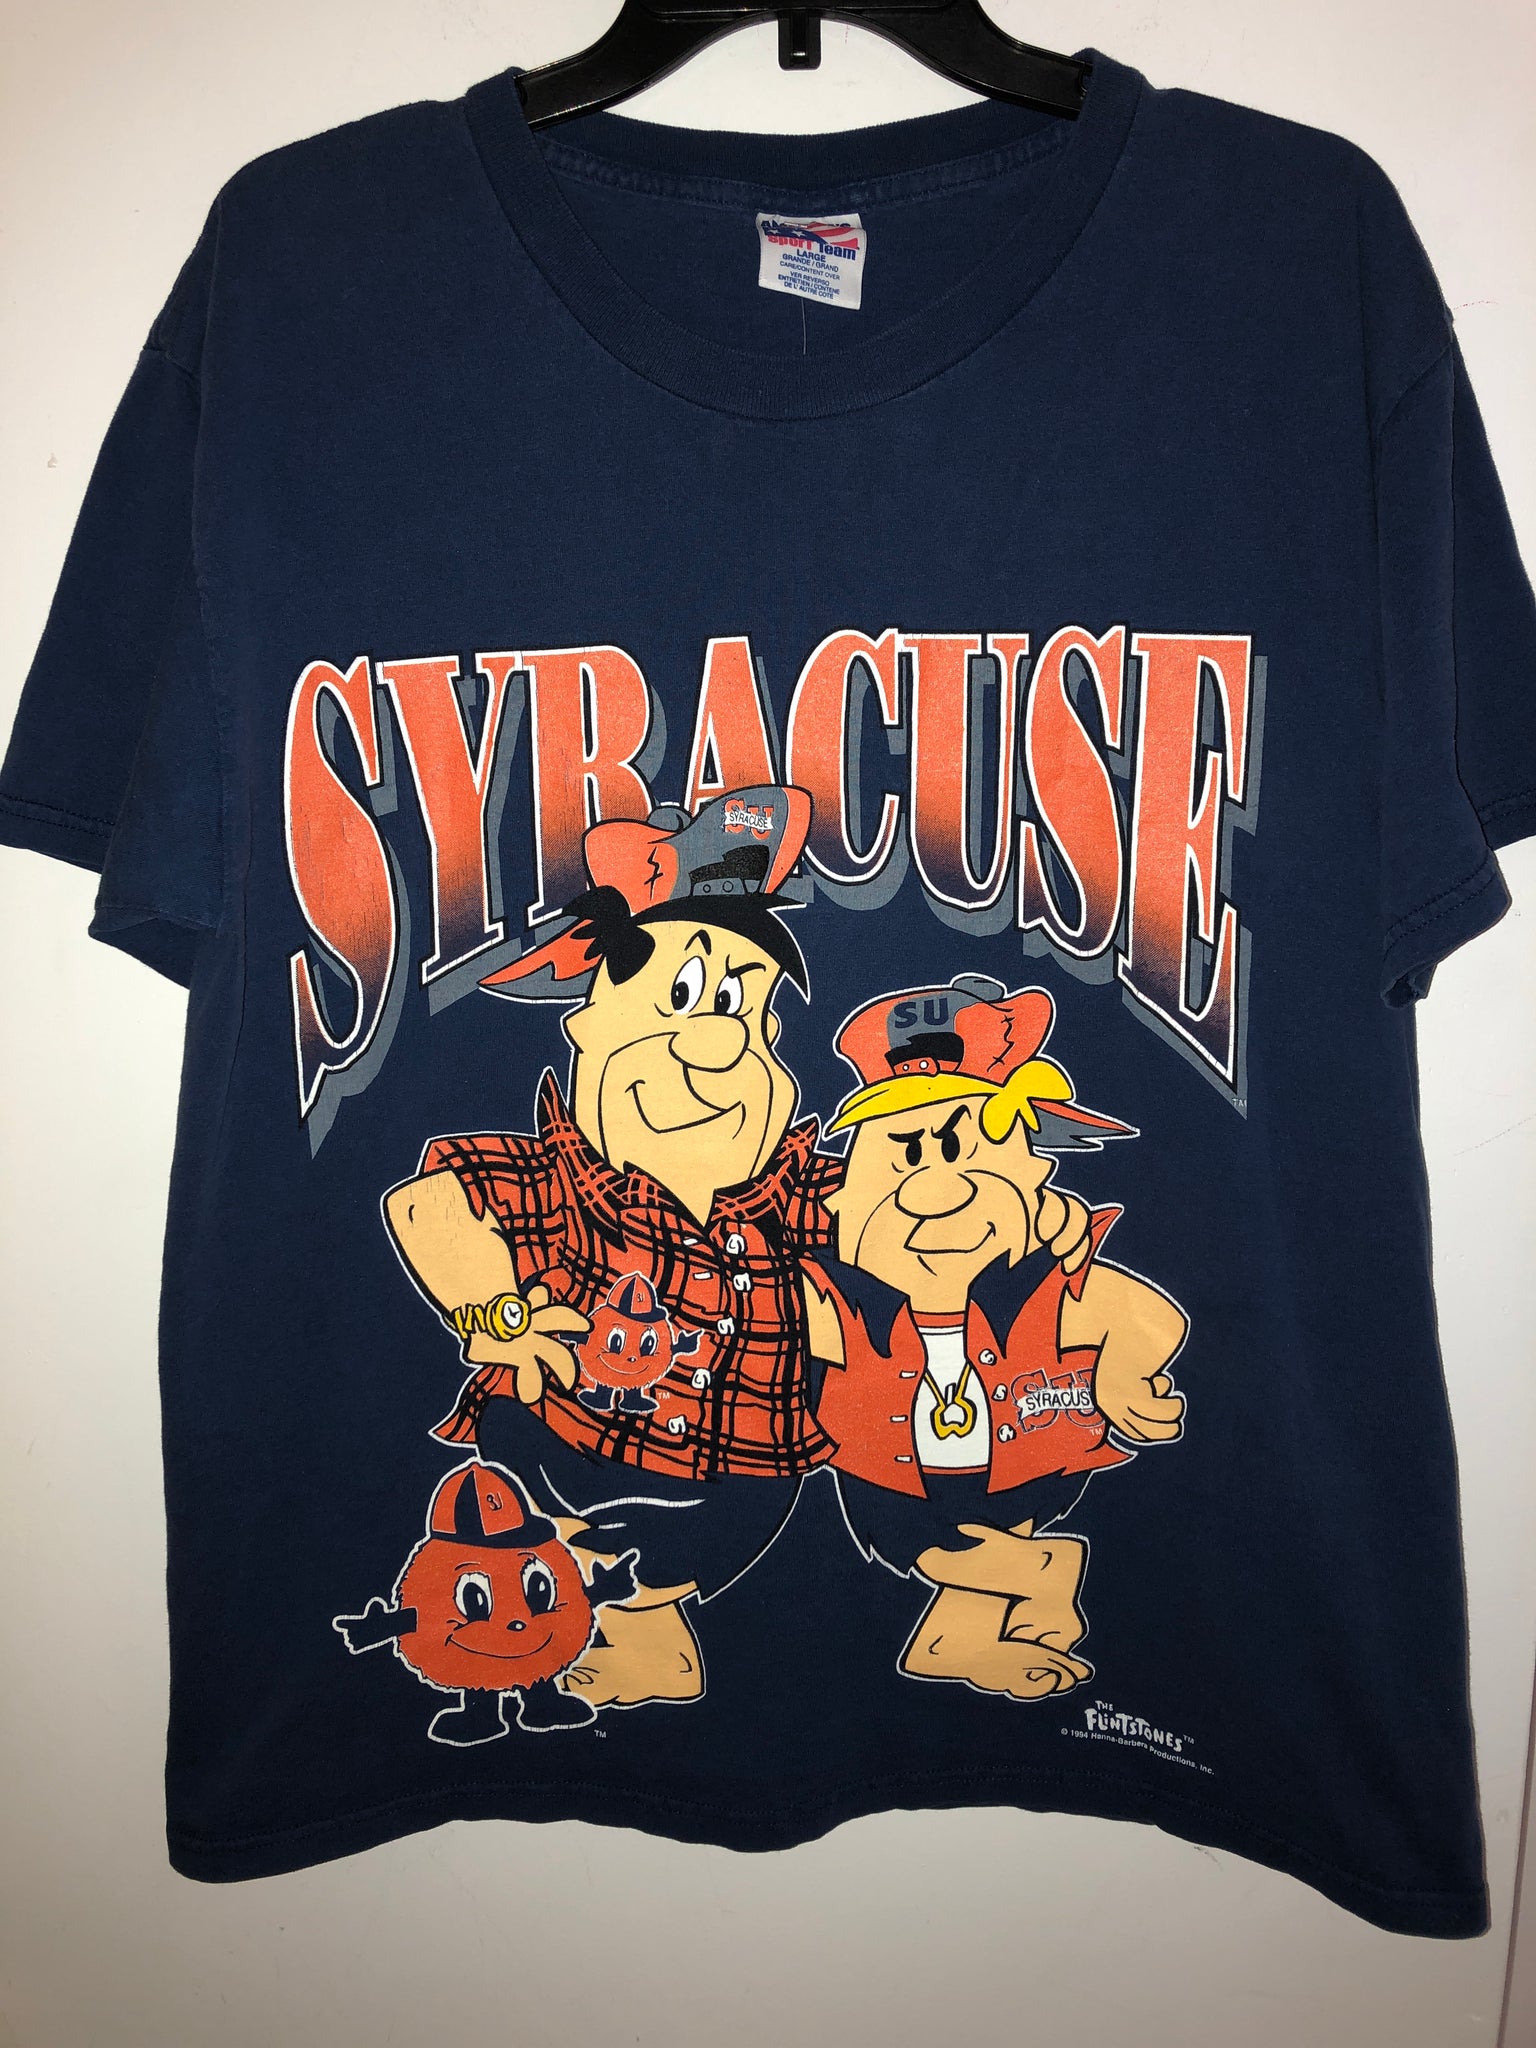 Extremely Rare Double T Vintage Scholars University Syracuse – Flintstones Champs & Sided